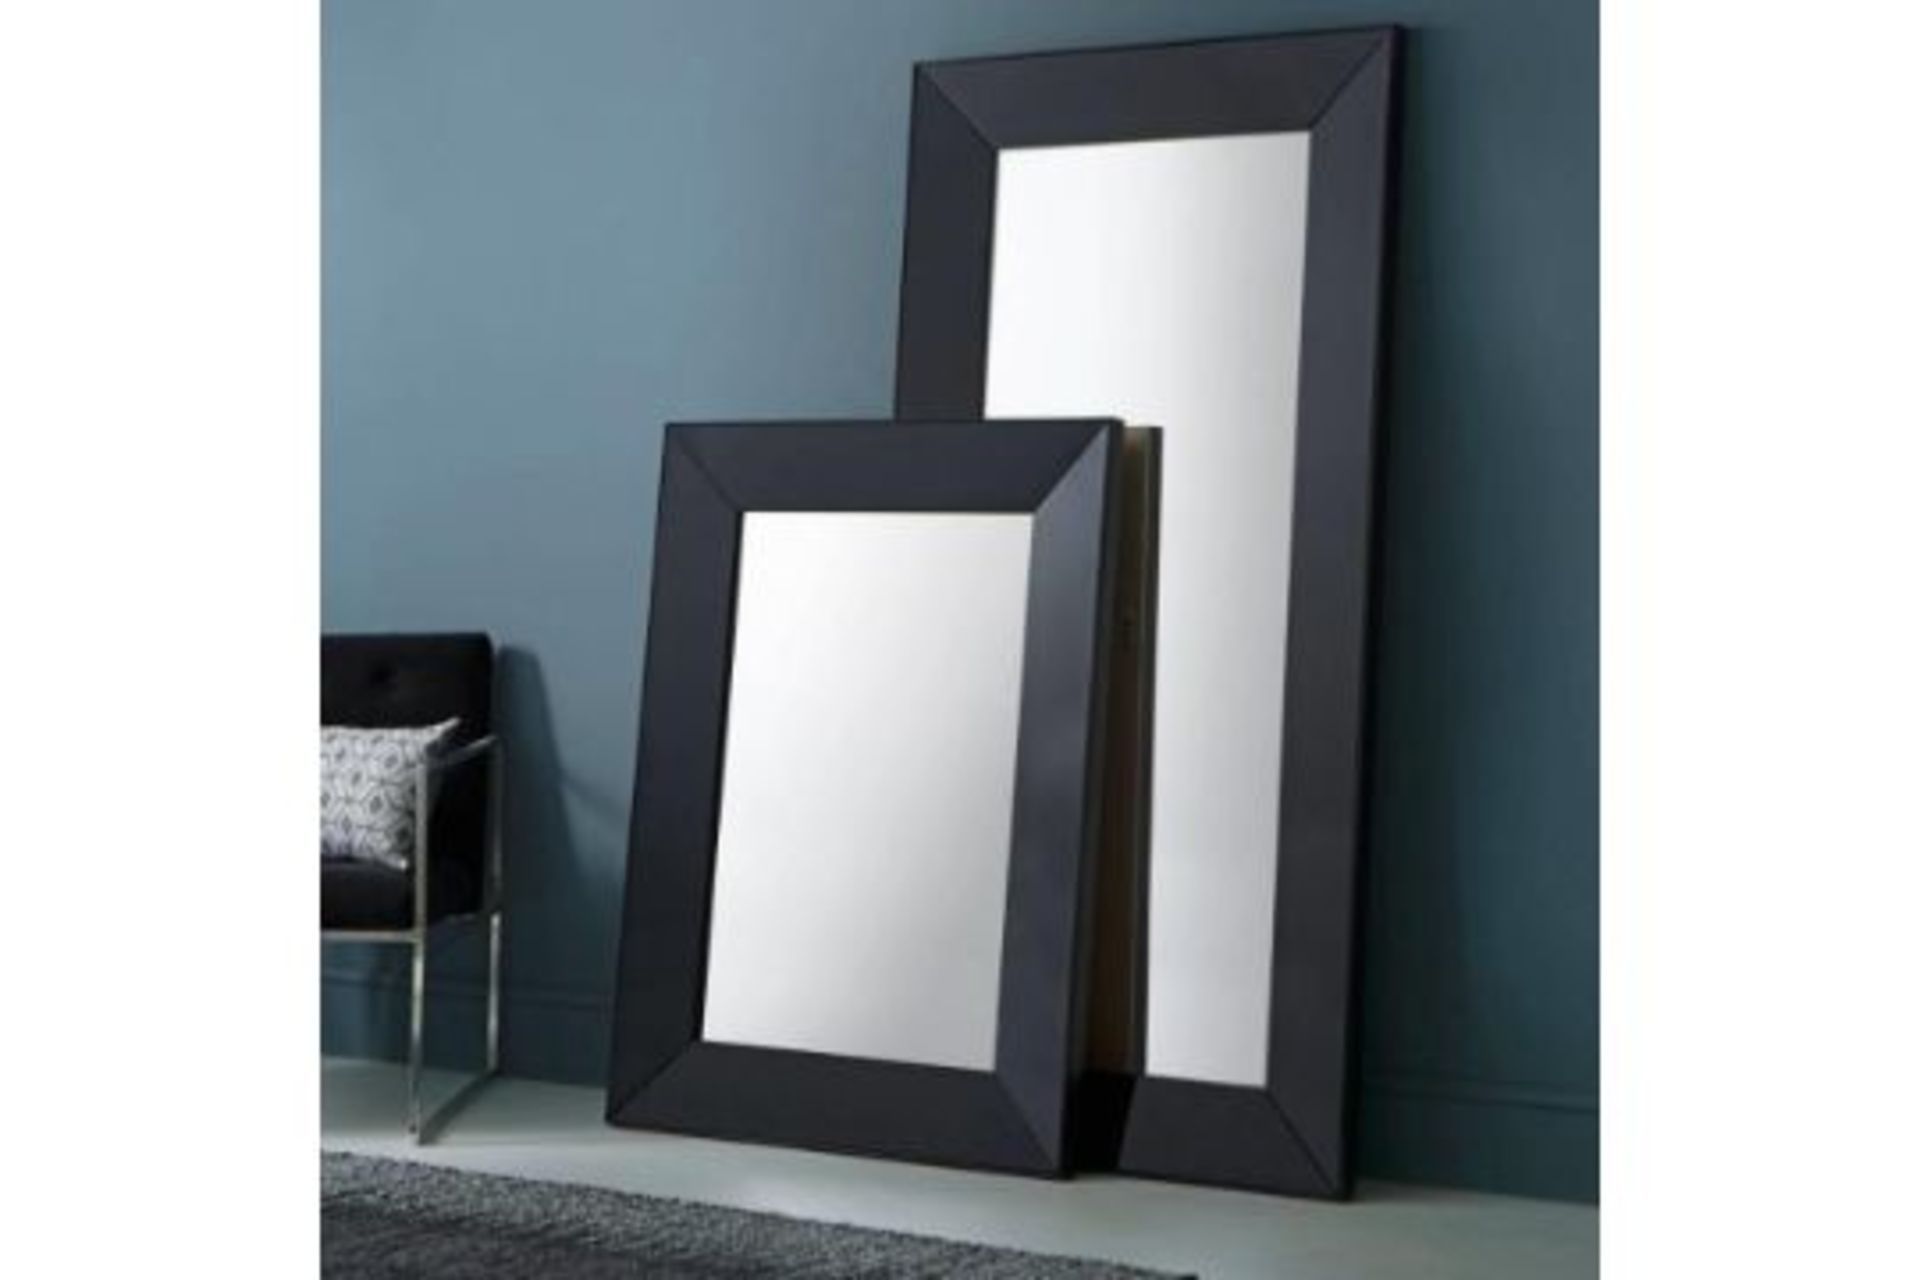 Brand New Boxed Vasto Leaner Black Stylish And Versatile, The Vasto Leaner Mirror Serves As A